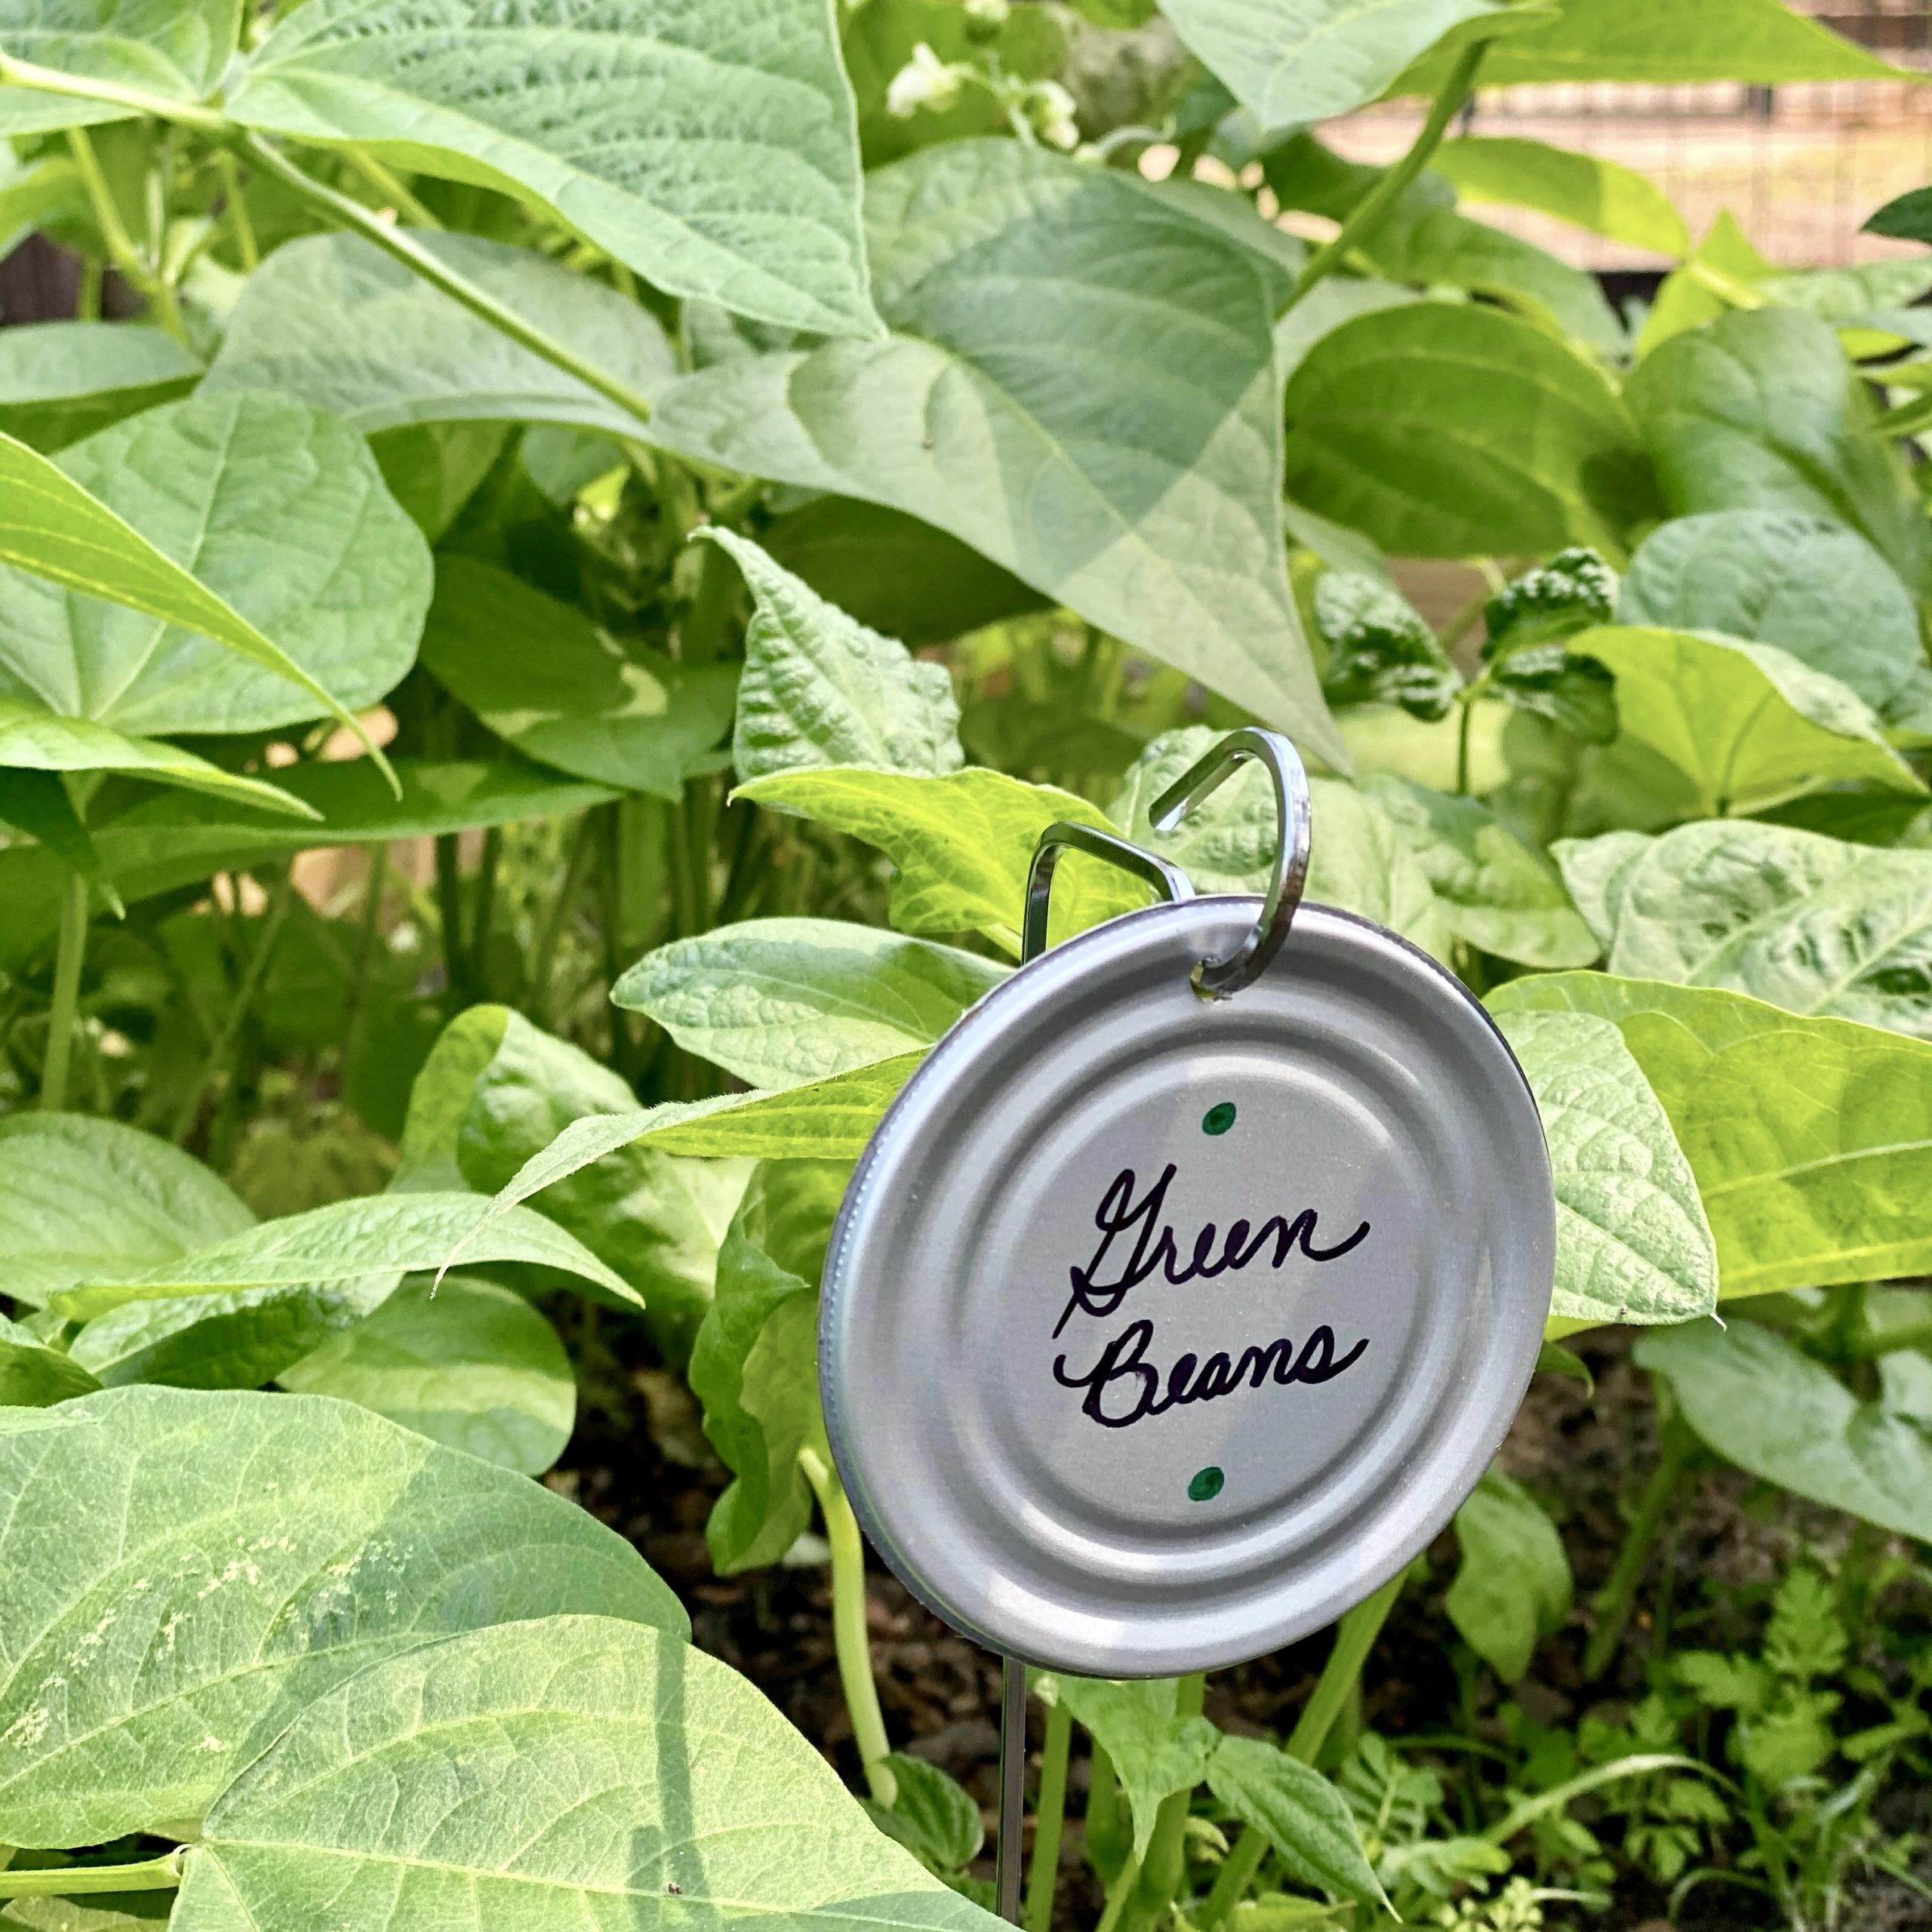 DIY garden marker with "green beans" written on it next to a green bean plant.